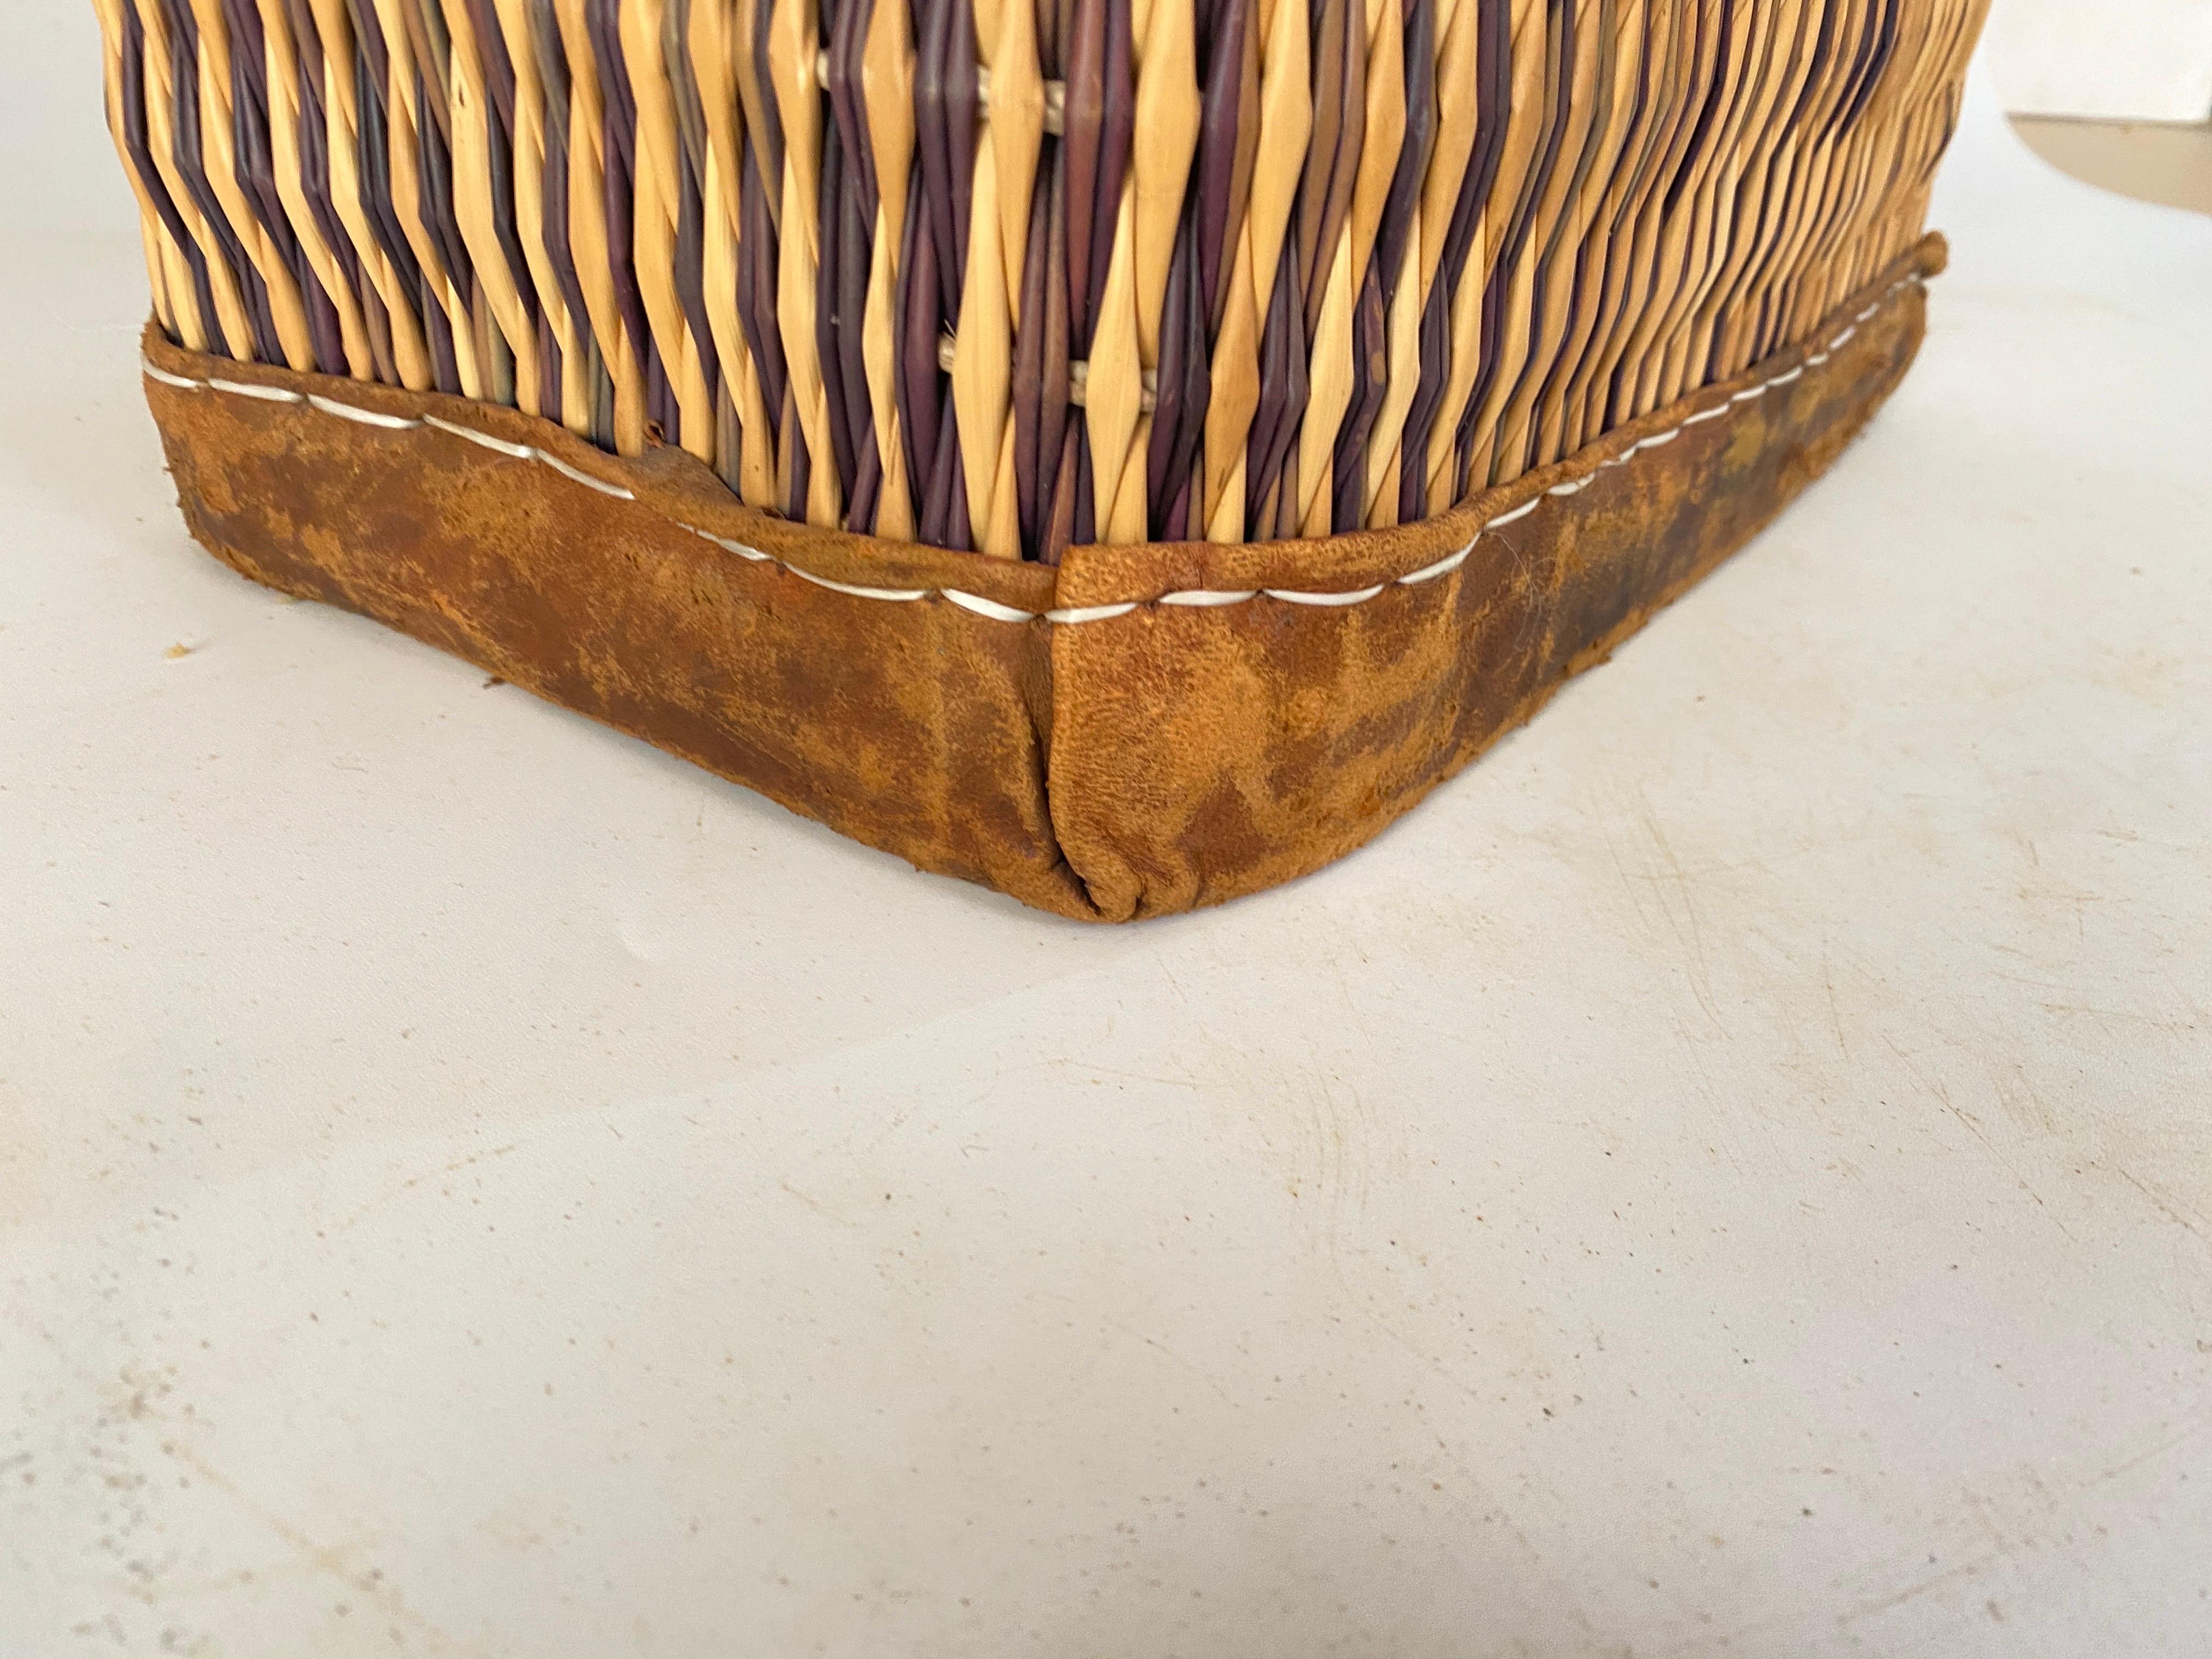 Vintage French Wicker Basket, Gold Color Stitched Leather Bag Handles France For Sale 24